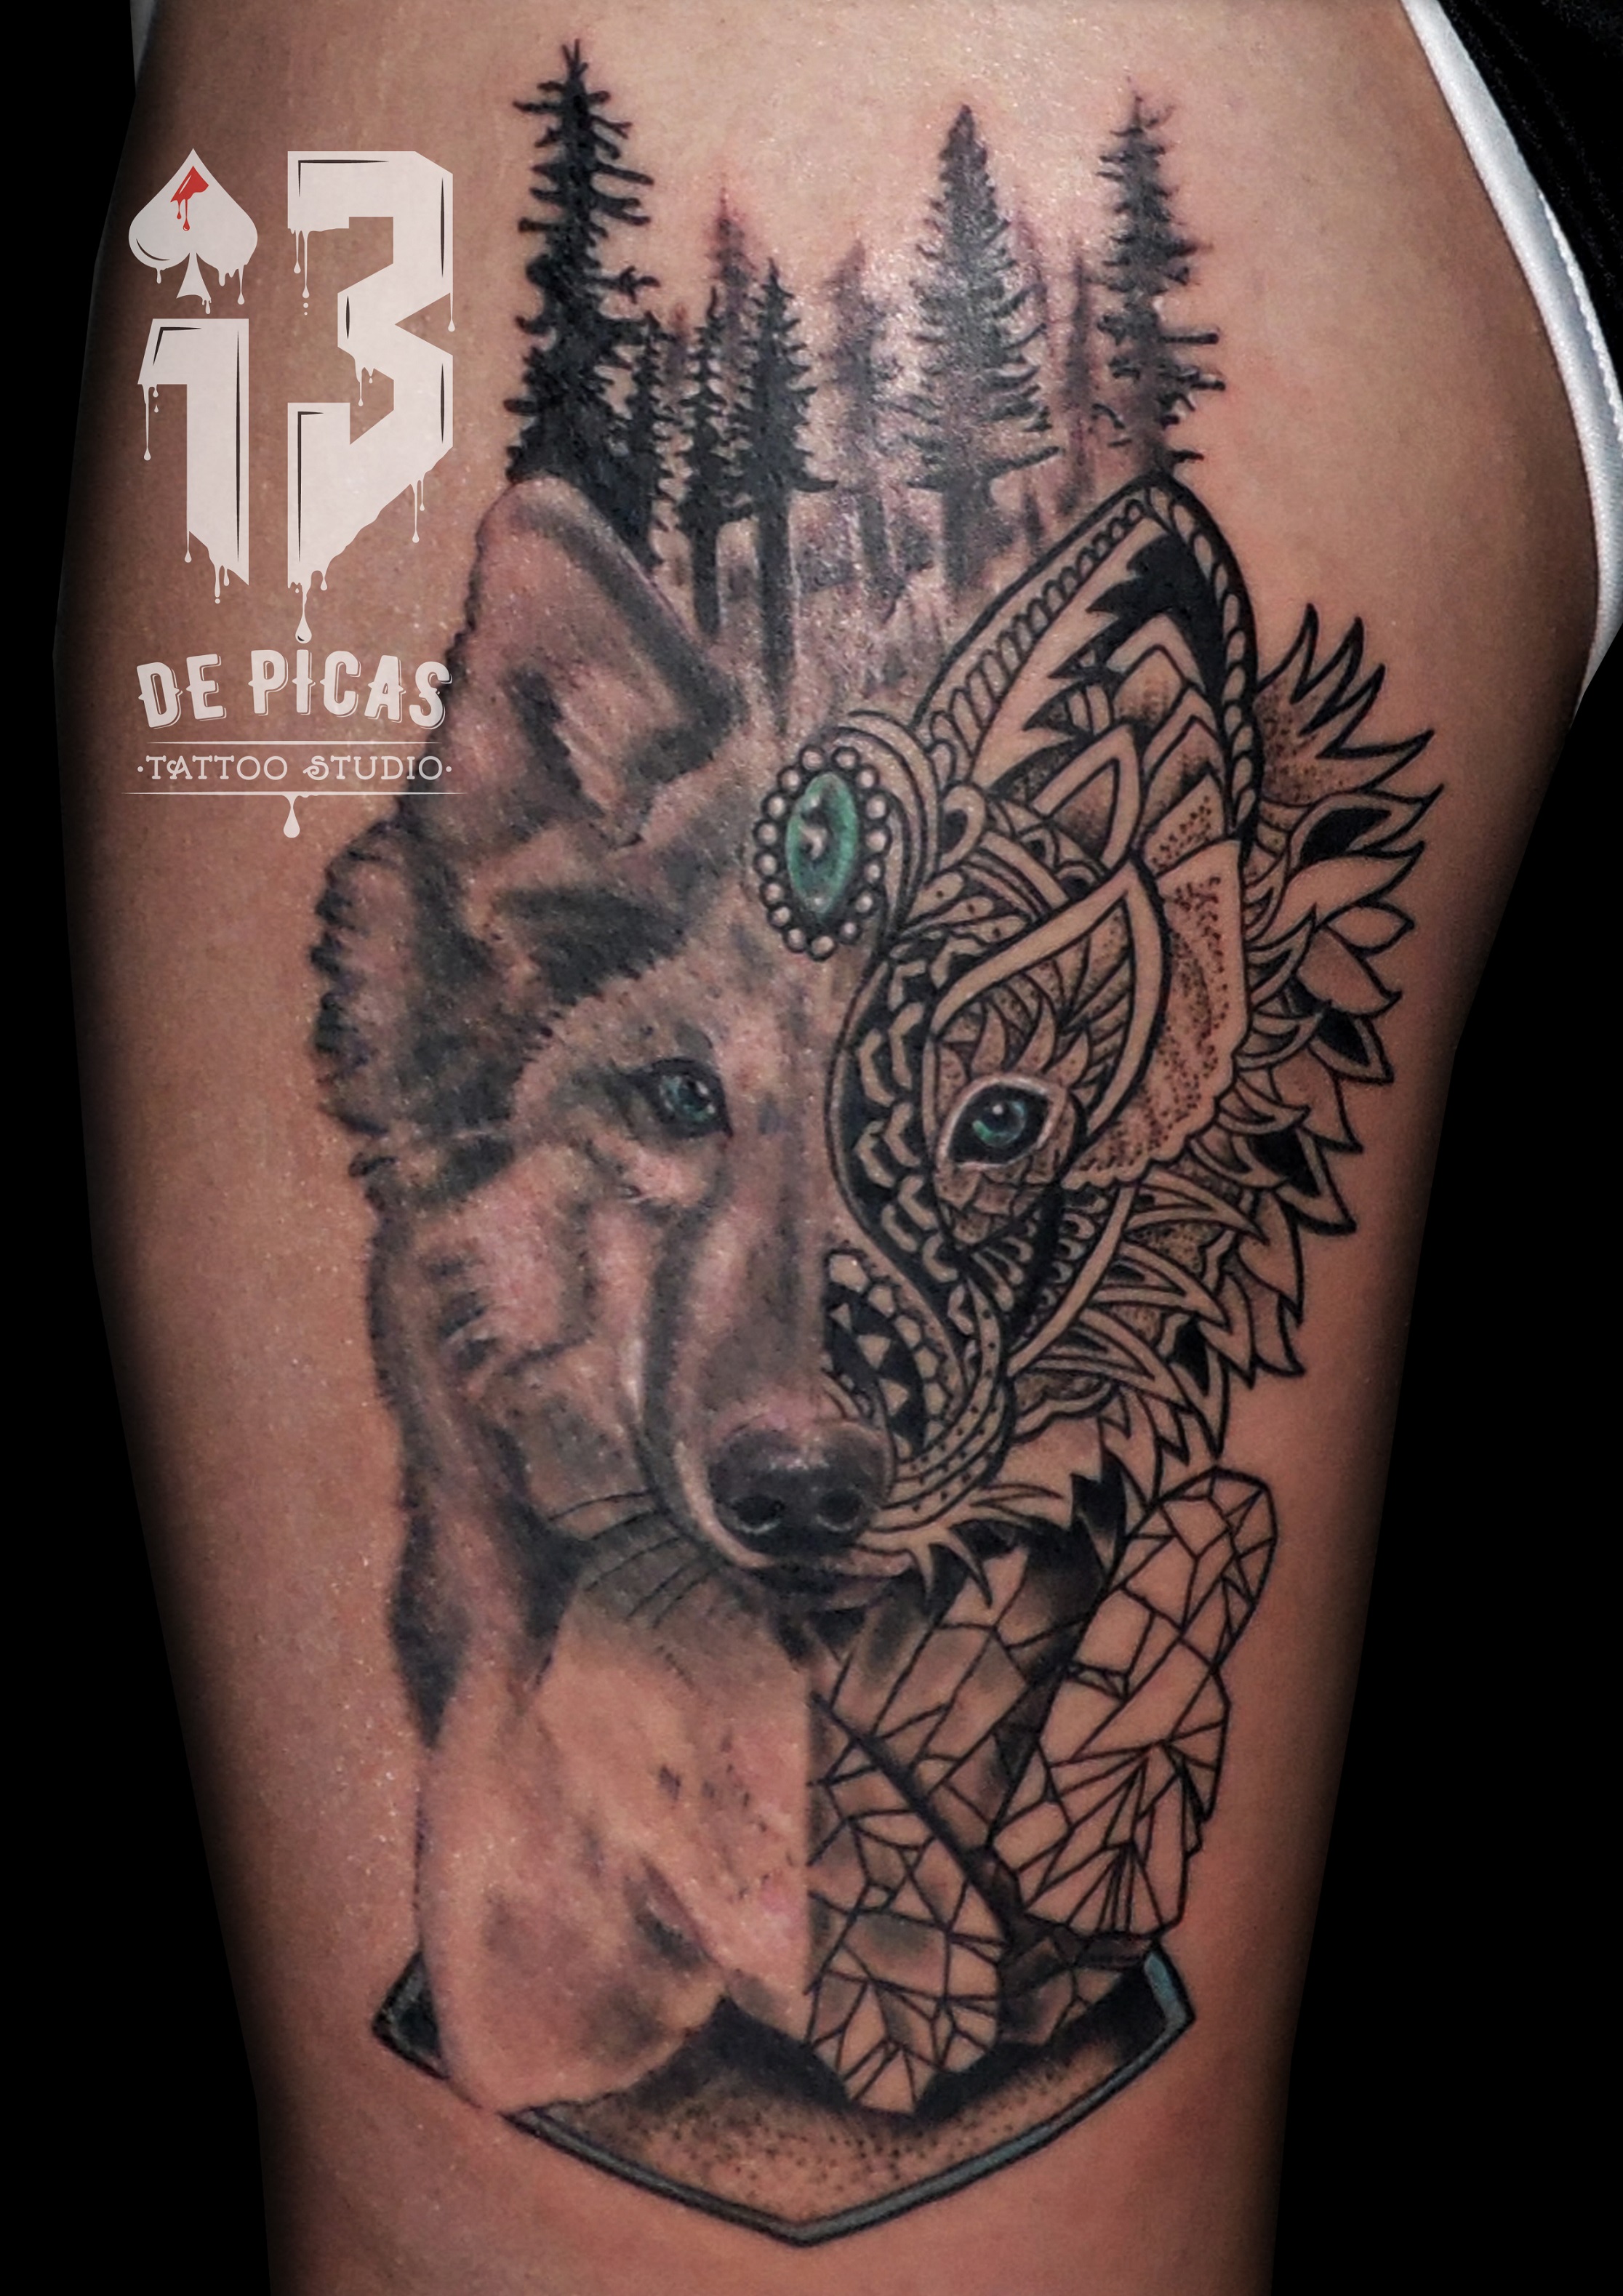 Tattoo Lobo realista cubista mandala 13depicastattoo jaca logo huesca spain tatuajes madein13 trecedepicas muslo pierna